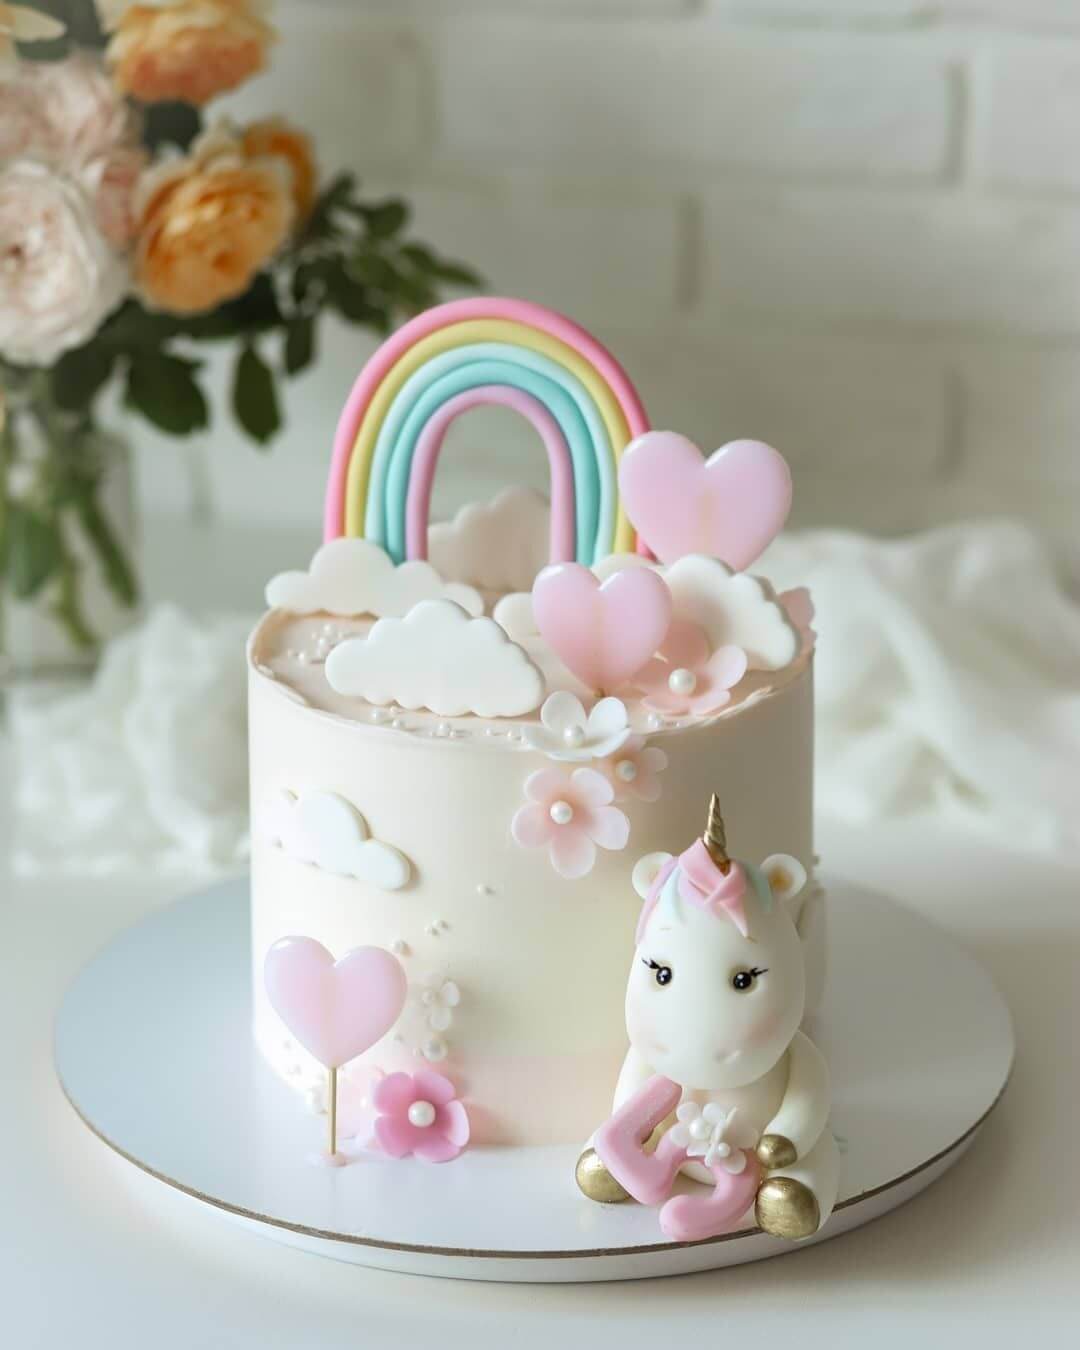 Top more than 192 rainbow unicorn cake